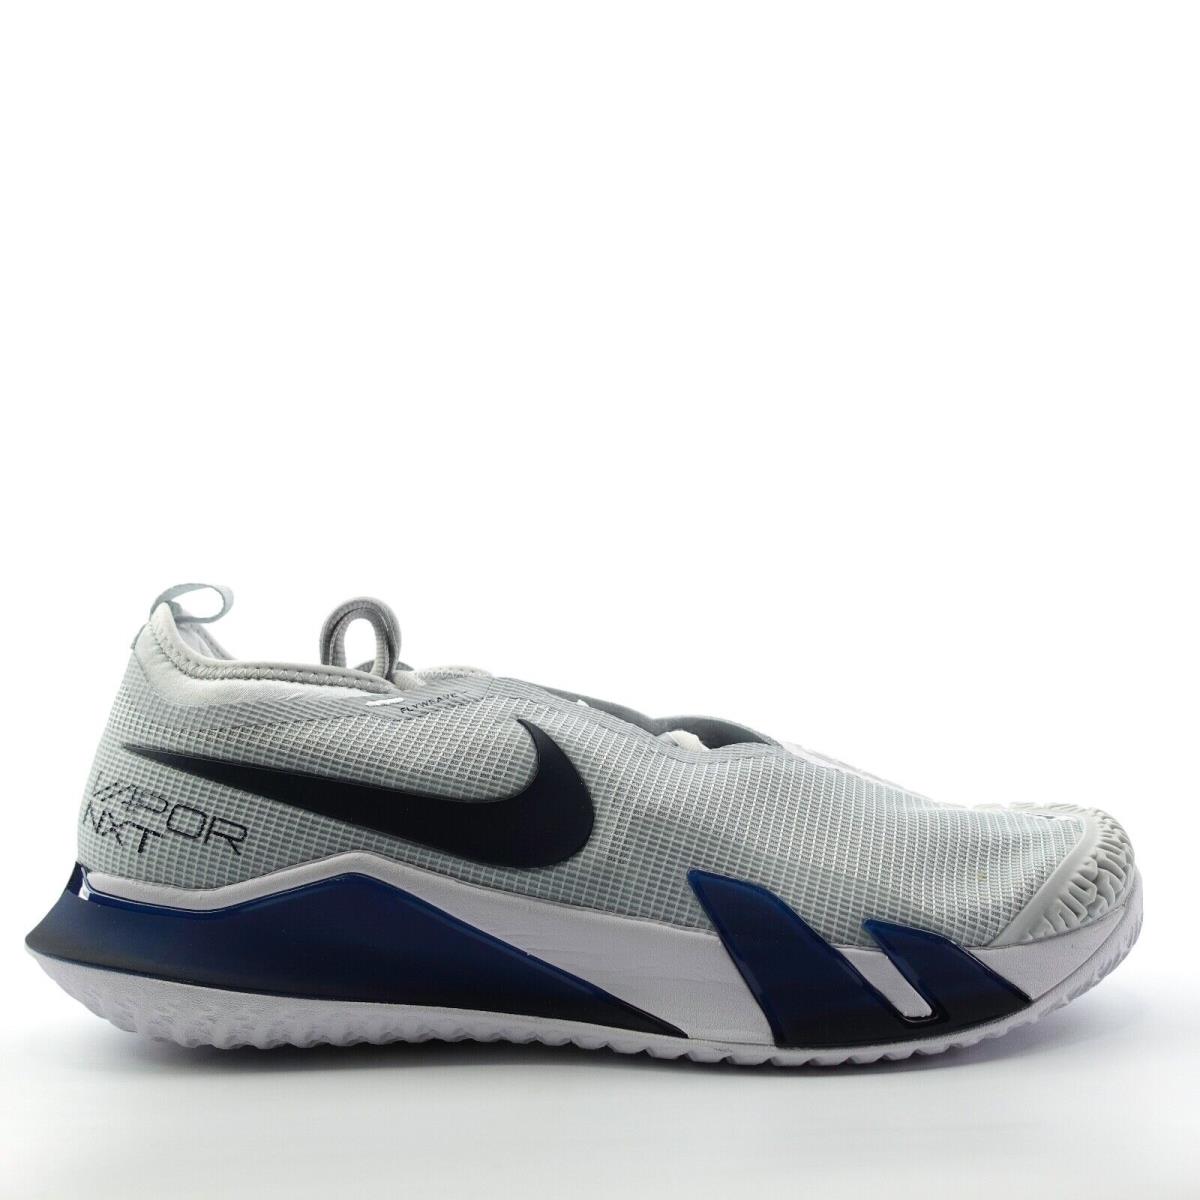 Nike Court React Vapor Nxt HC Tennis Shoes Grey Blue CV0724-007 Mens Size 12.5